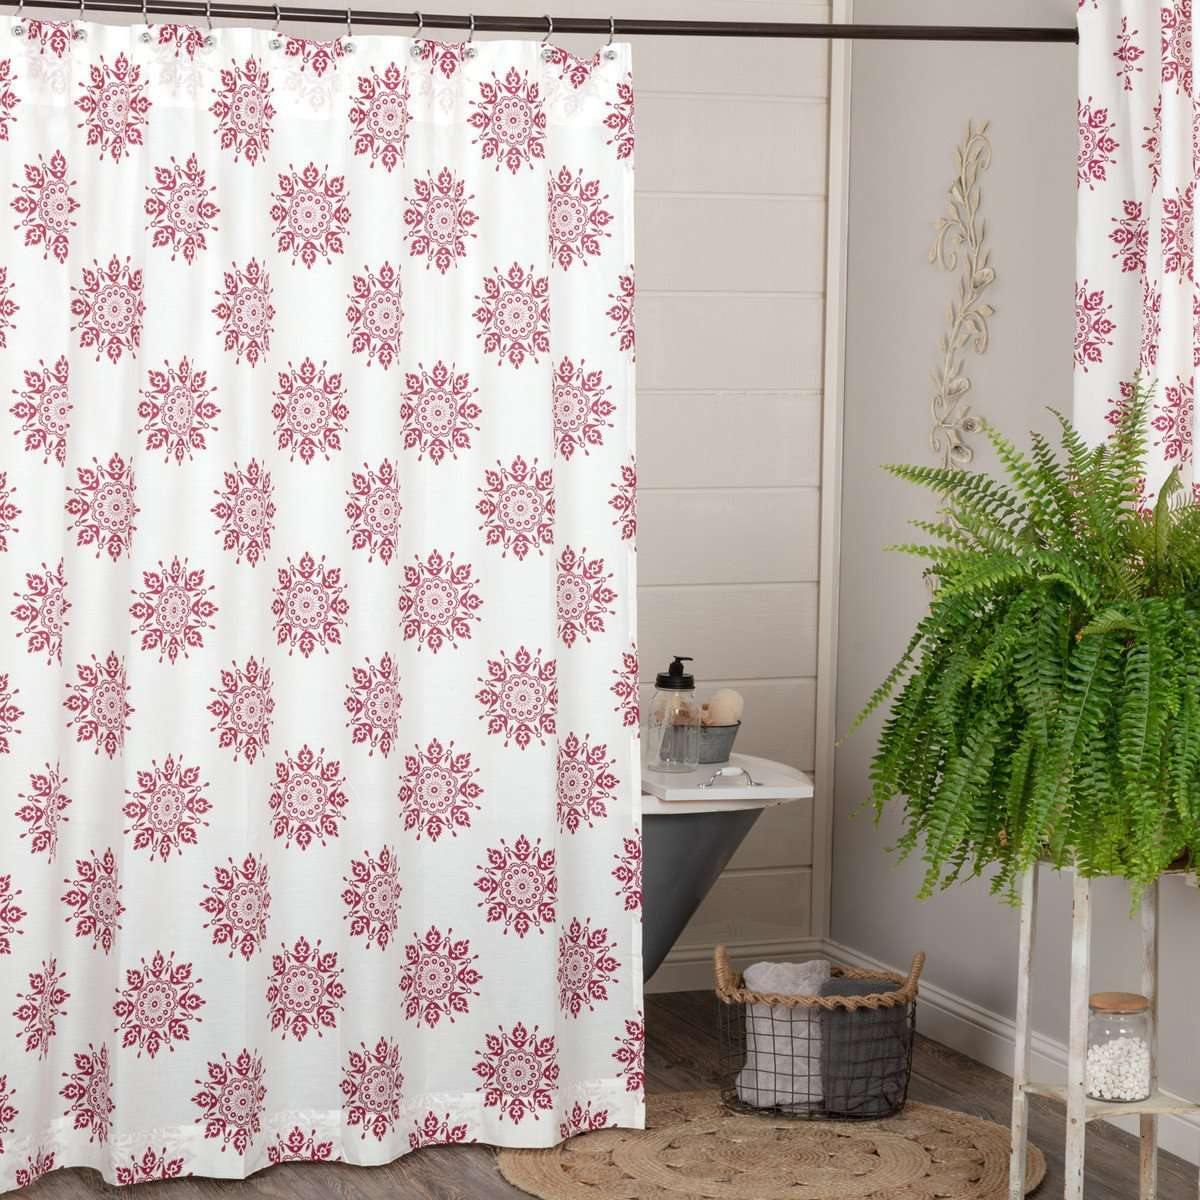 Mariposa Fuchsia Shower Curtain 72"x 72" Marshmallow, Turquoise - VHC Brands - The Fox Decor